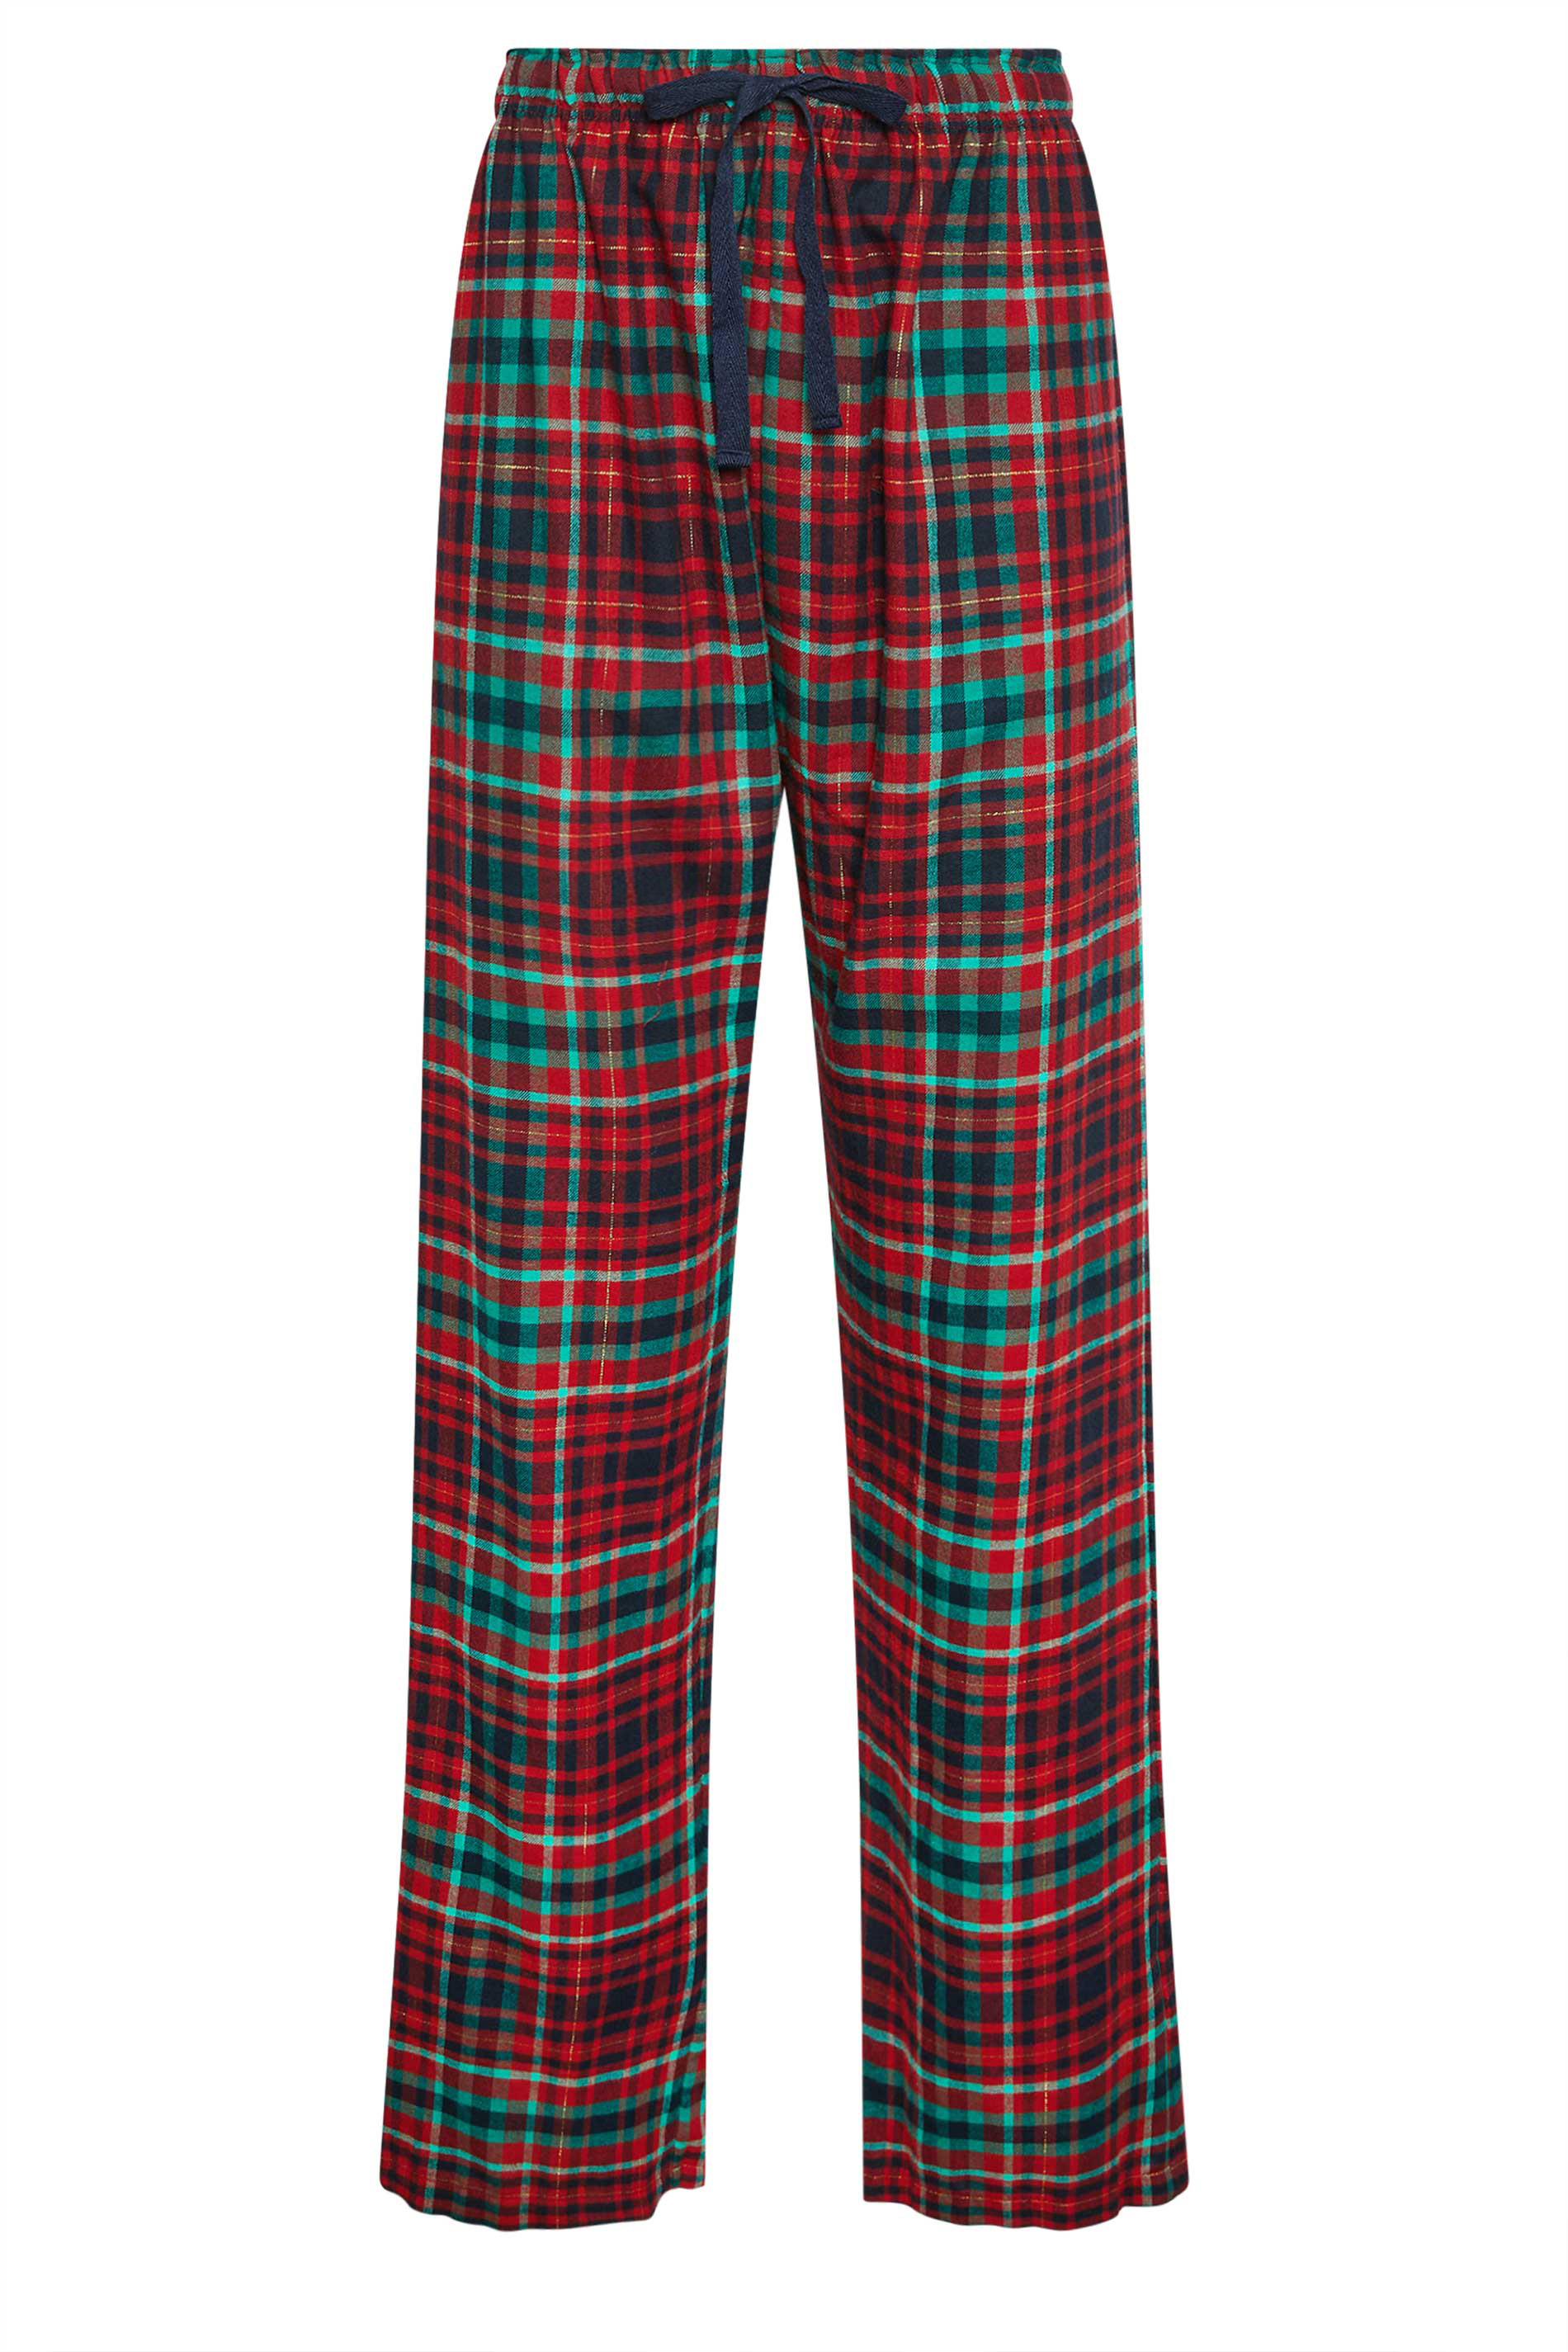 LTS Tall Red Tartan Pyjama Bottoms | Long Tall Sally